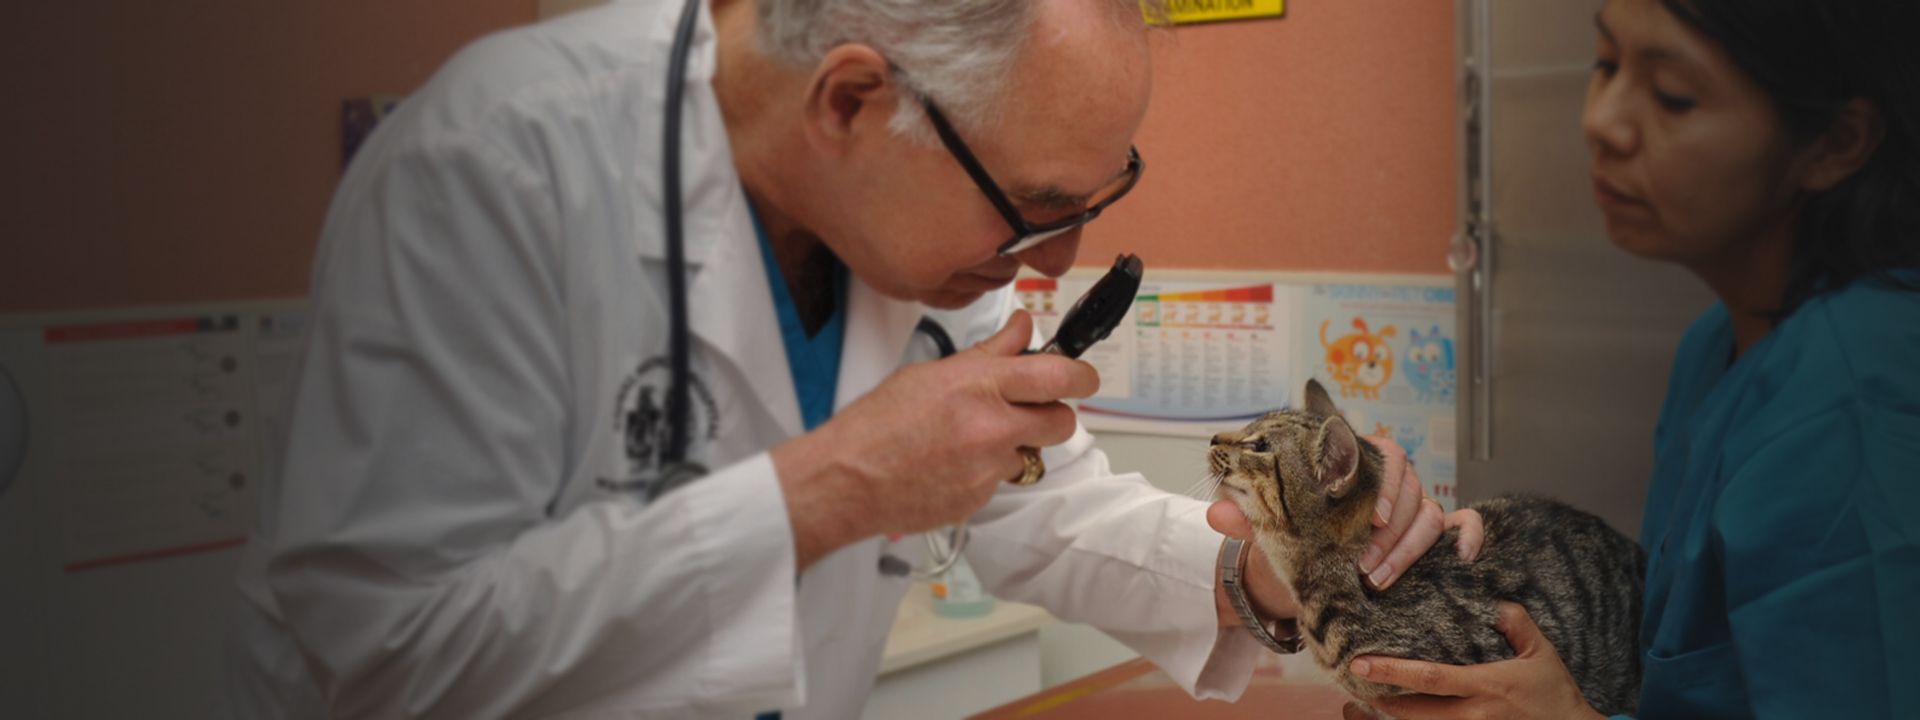 doctor douglas performing a wellness exam on cat